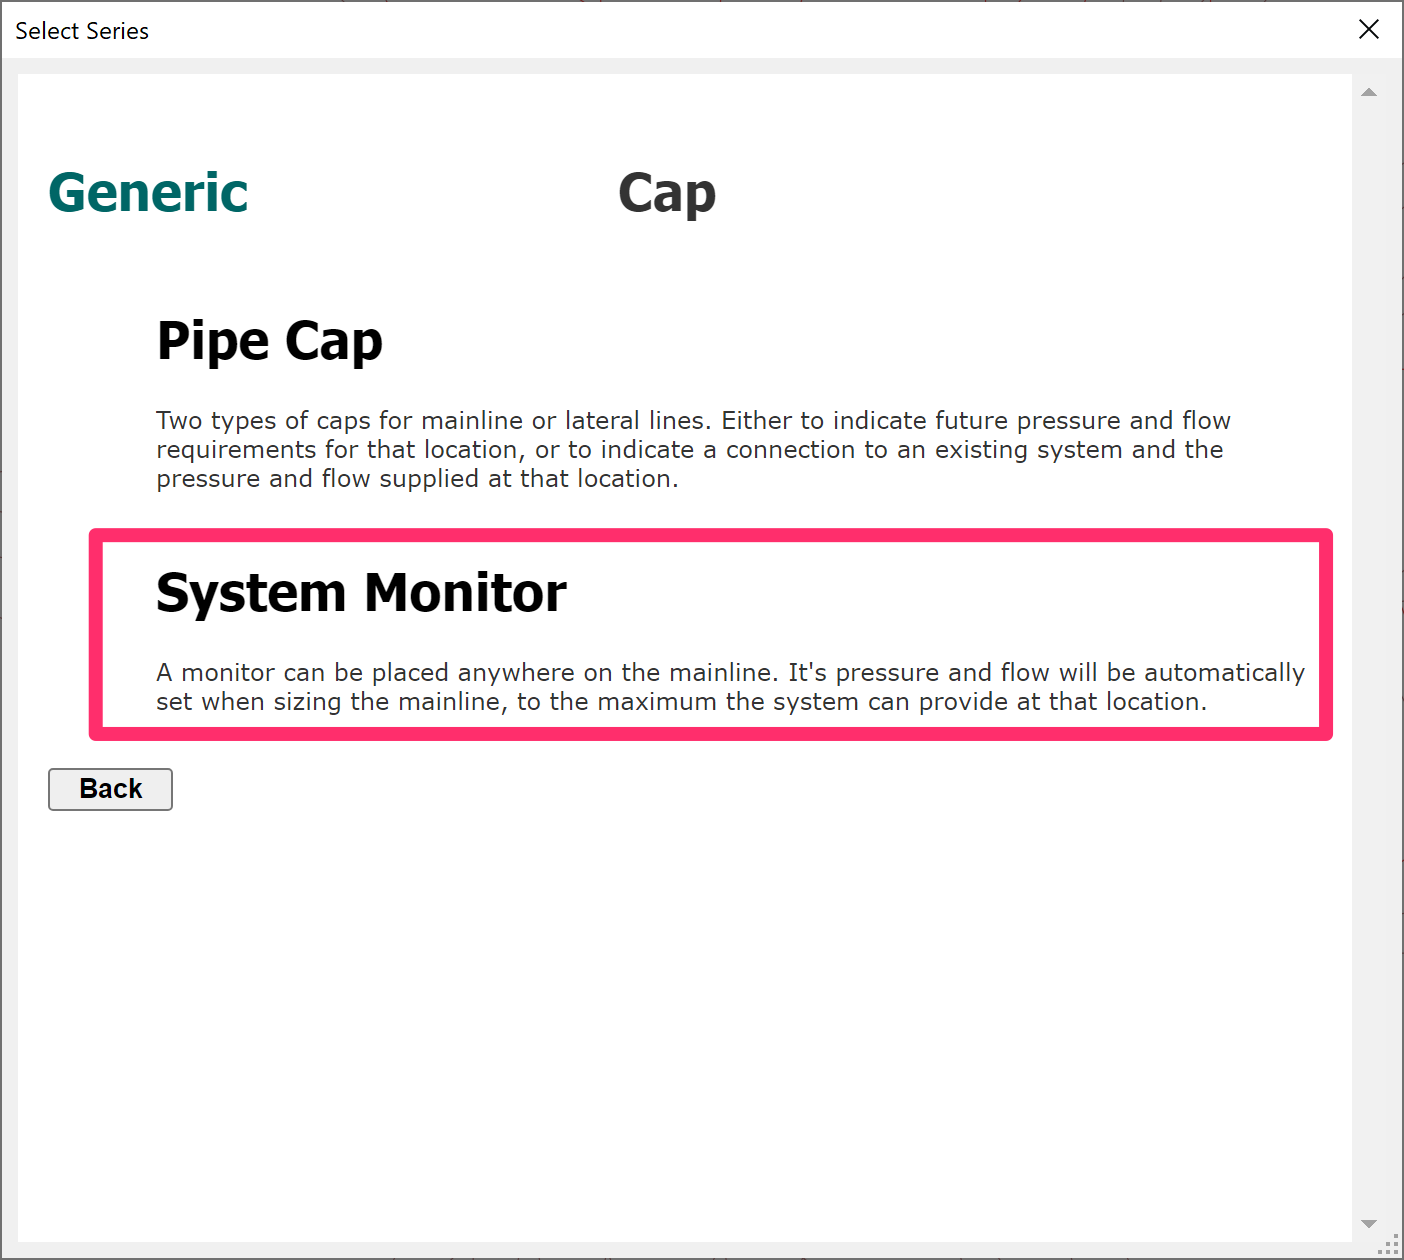 Select Series dialog box, System Monitor option